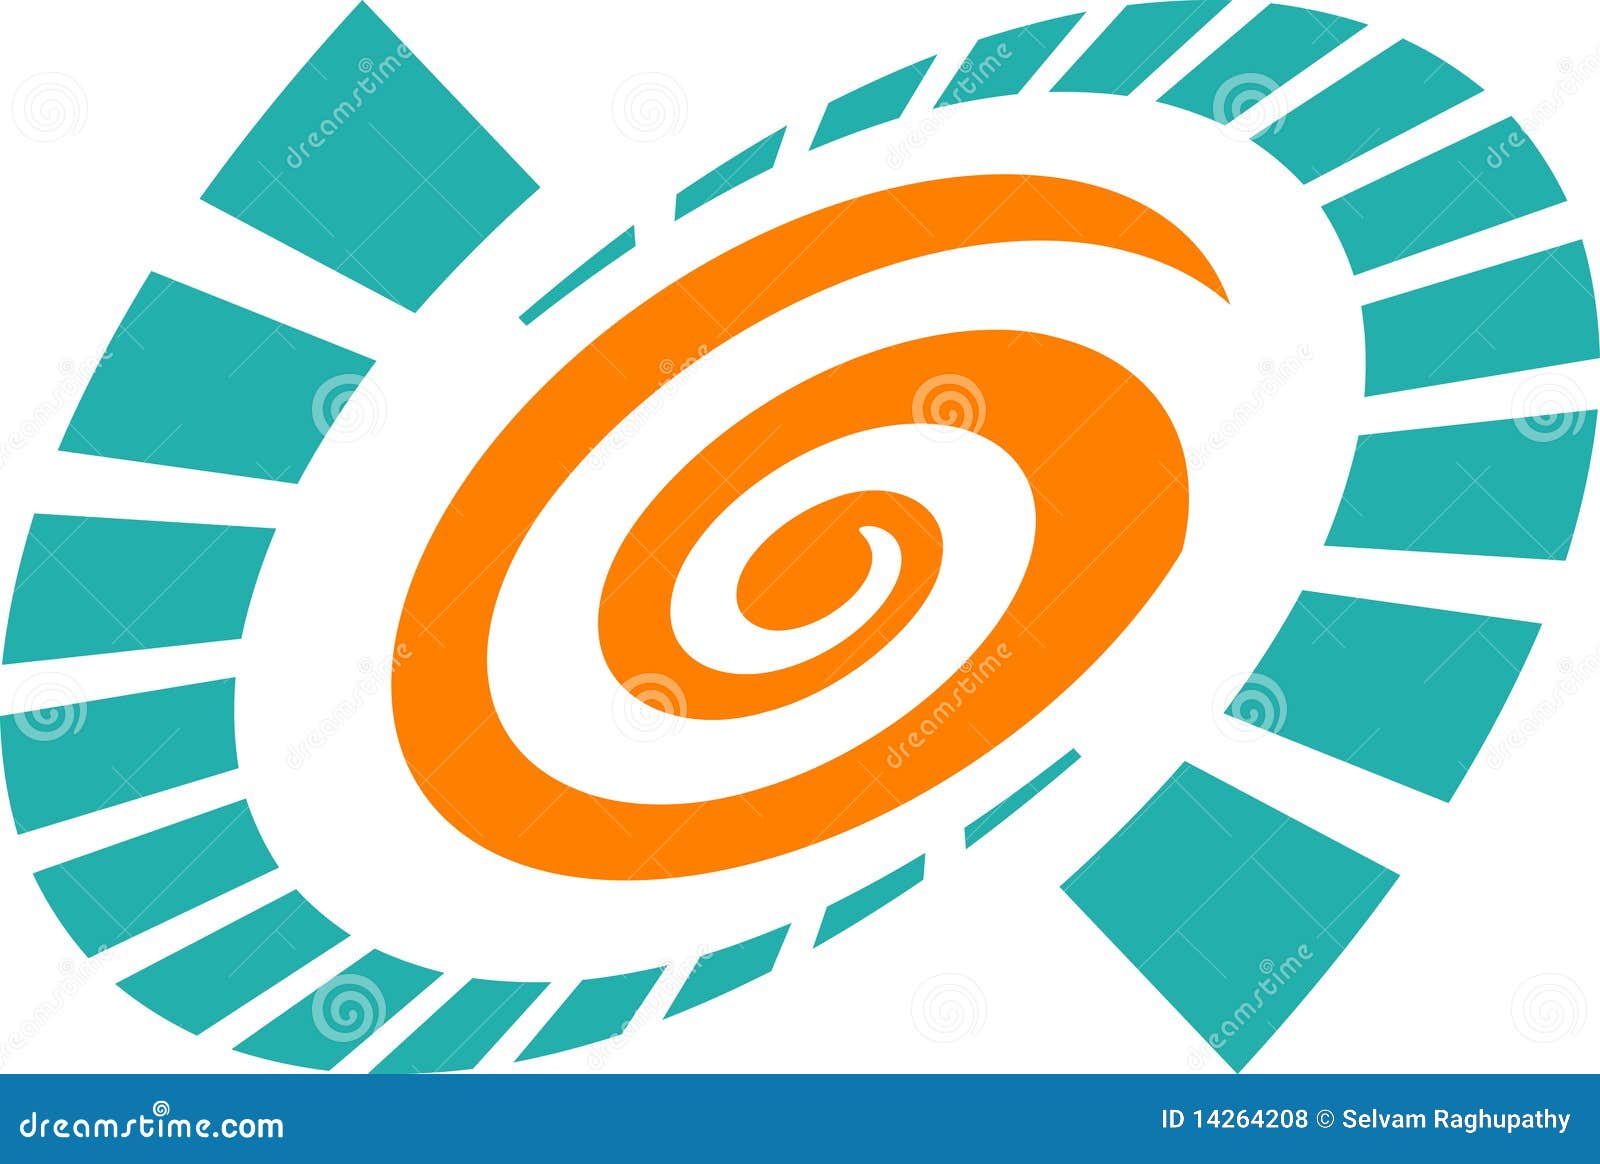 swirl logo